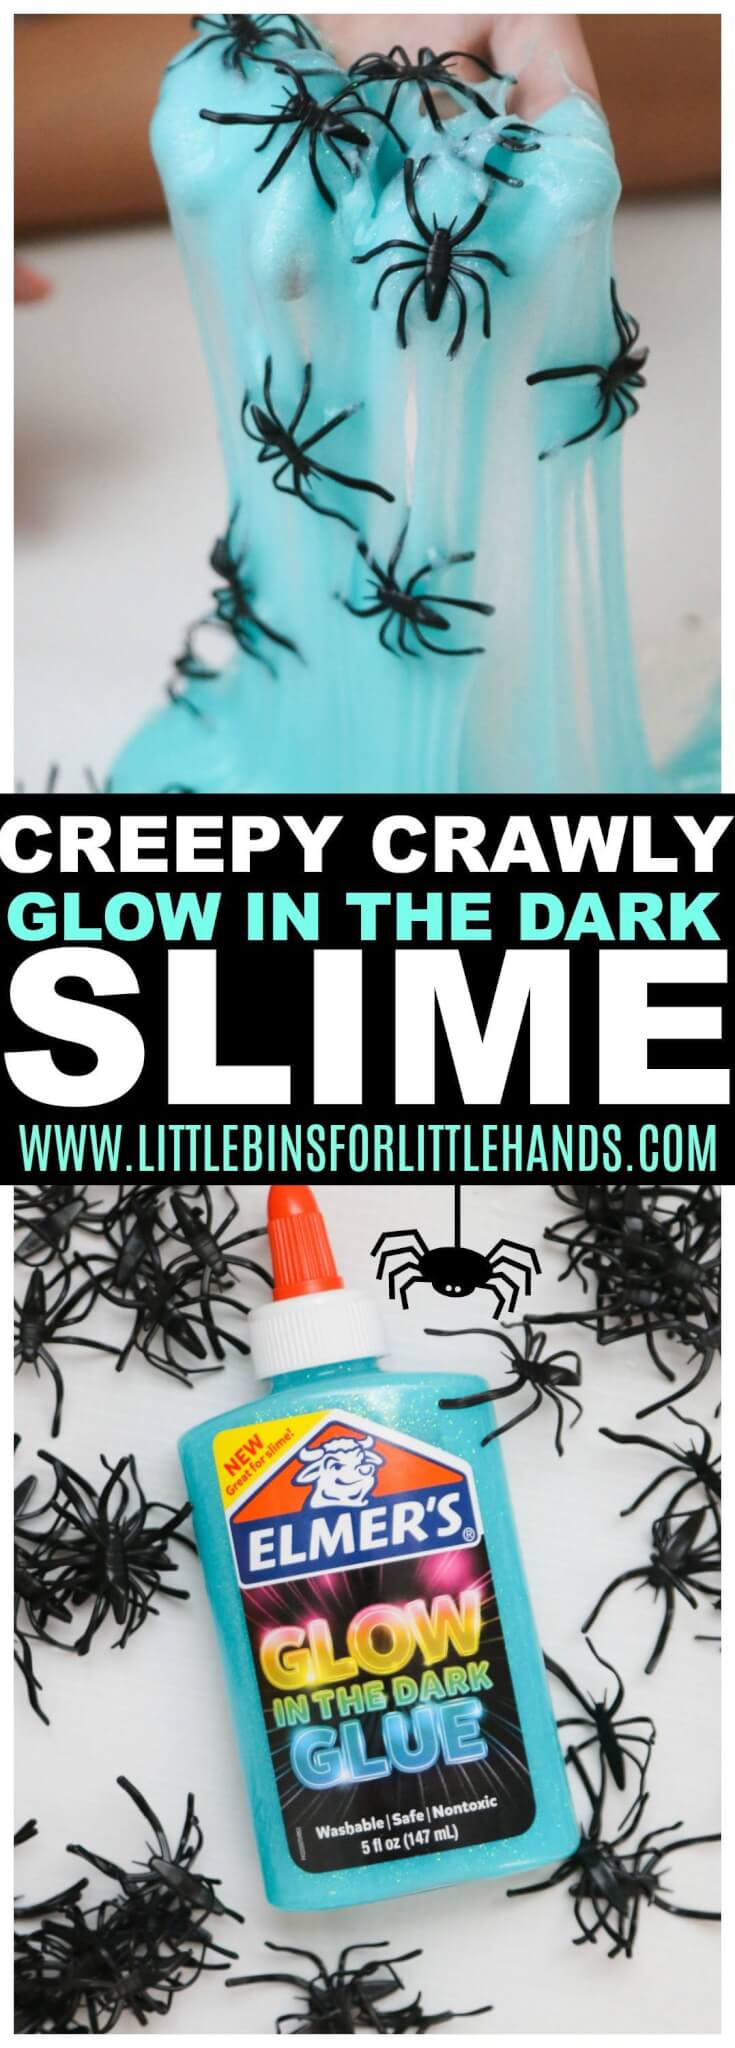 Elmers Glow In The Dark Glue Slime